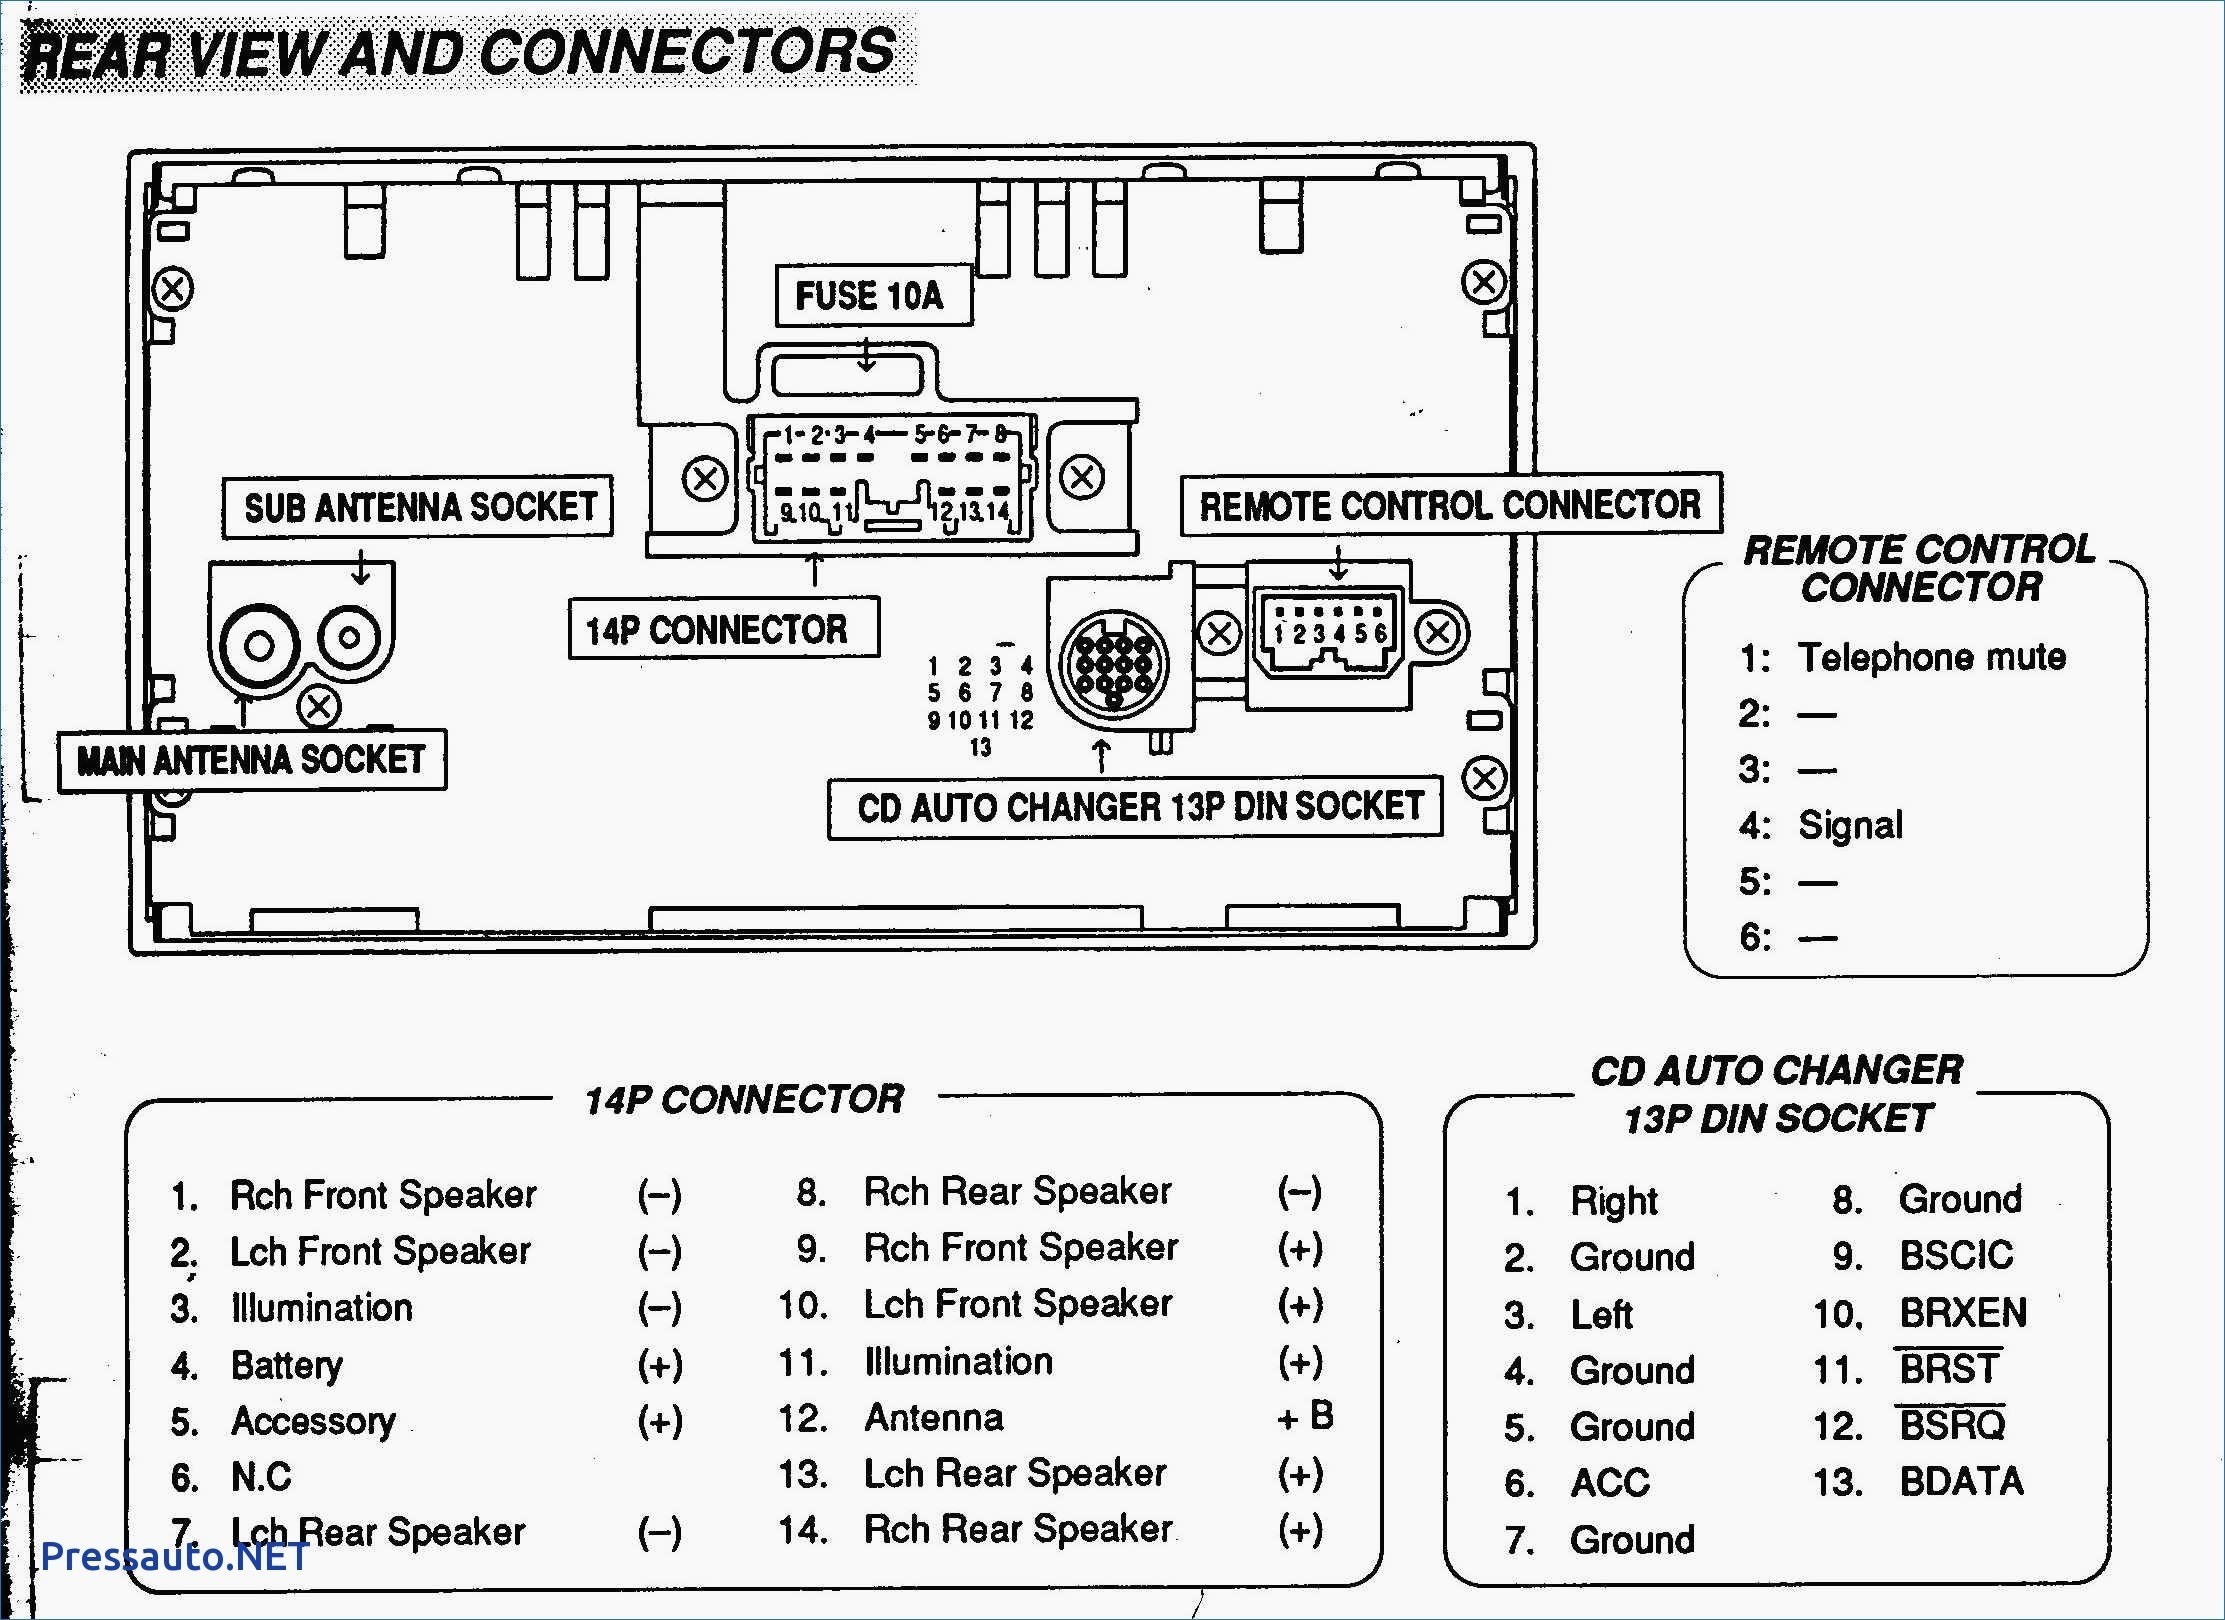 Car Audio Wire Diagram Wiring Diagram for Car Audio System Of Car Audio Wire Diagram